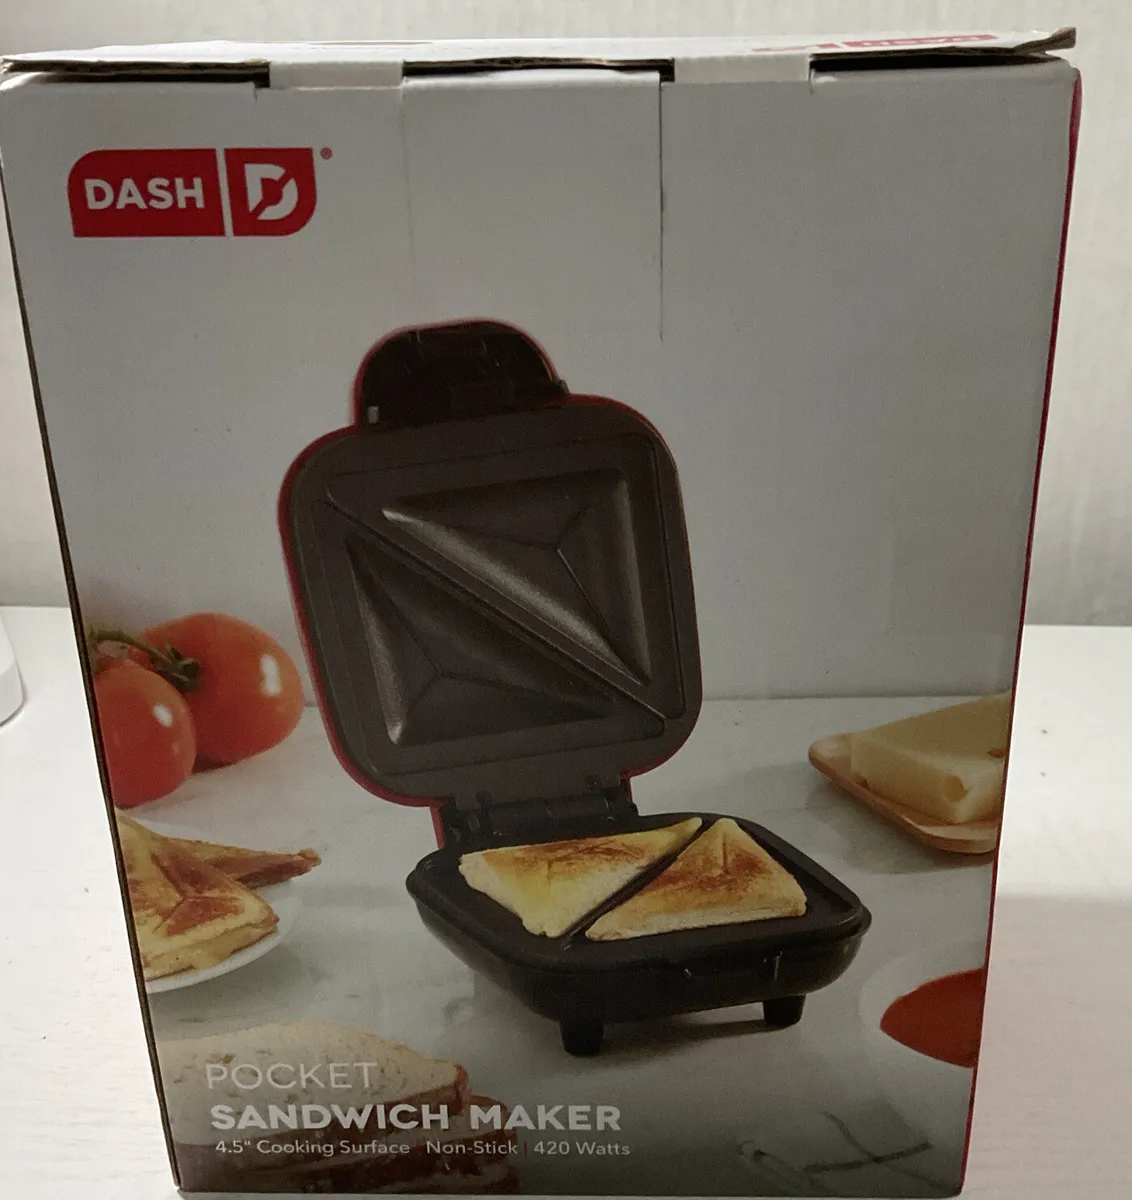 Dash Pocket Sandwich Maker - 4.5 Cooking Surface, 420 Watts